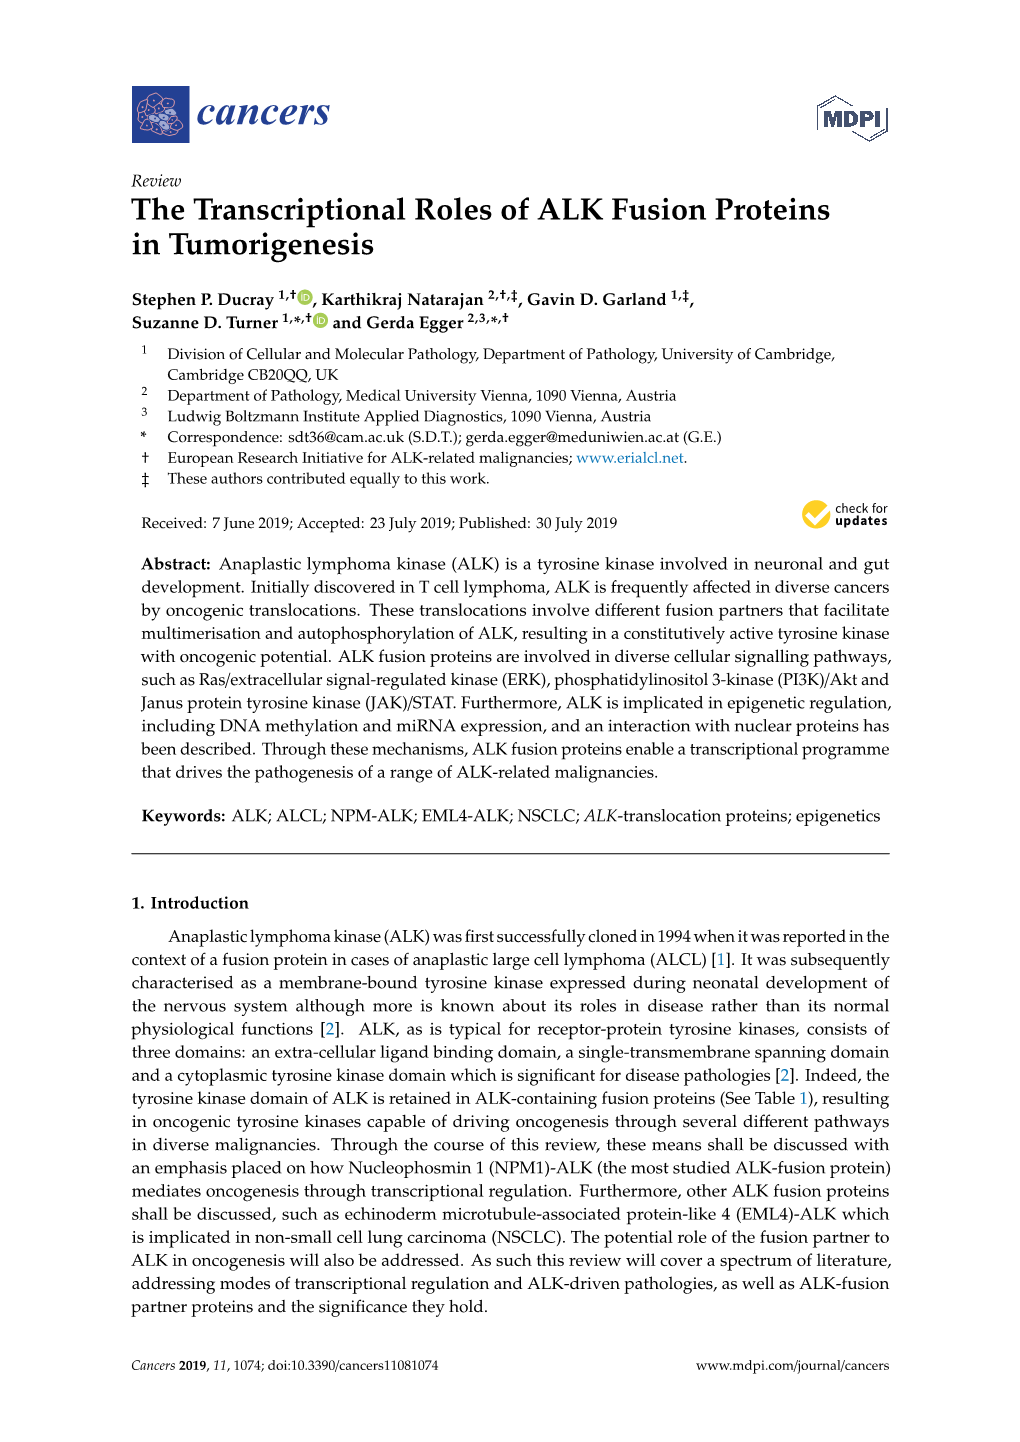 The Transcriptional Roles of ALK Fusion Proteins in Tumorigenesis